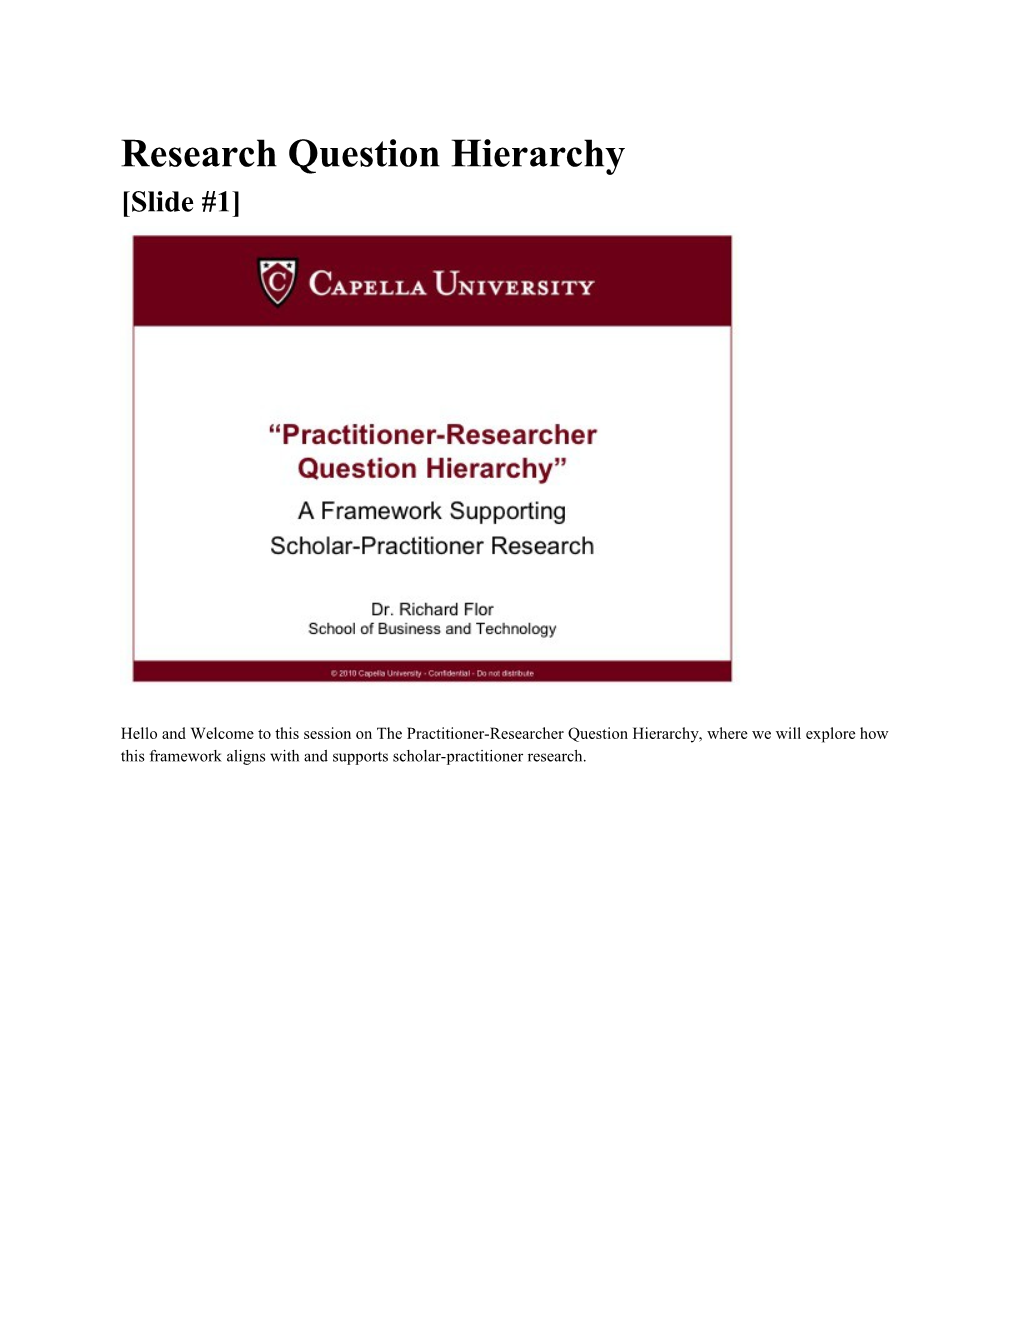 Research Question Hierarchy Transcript